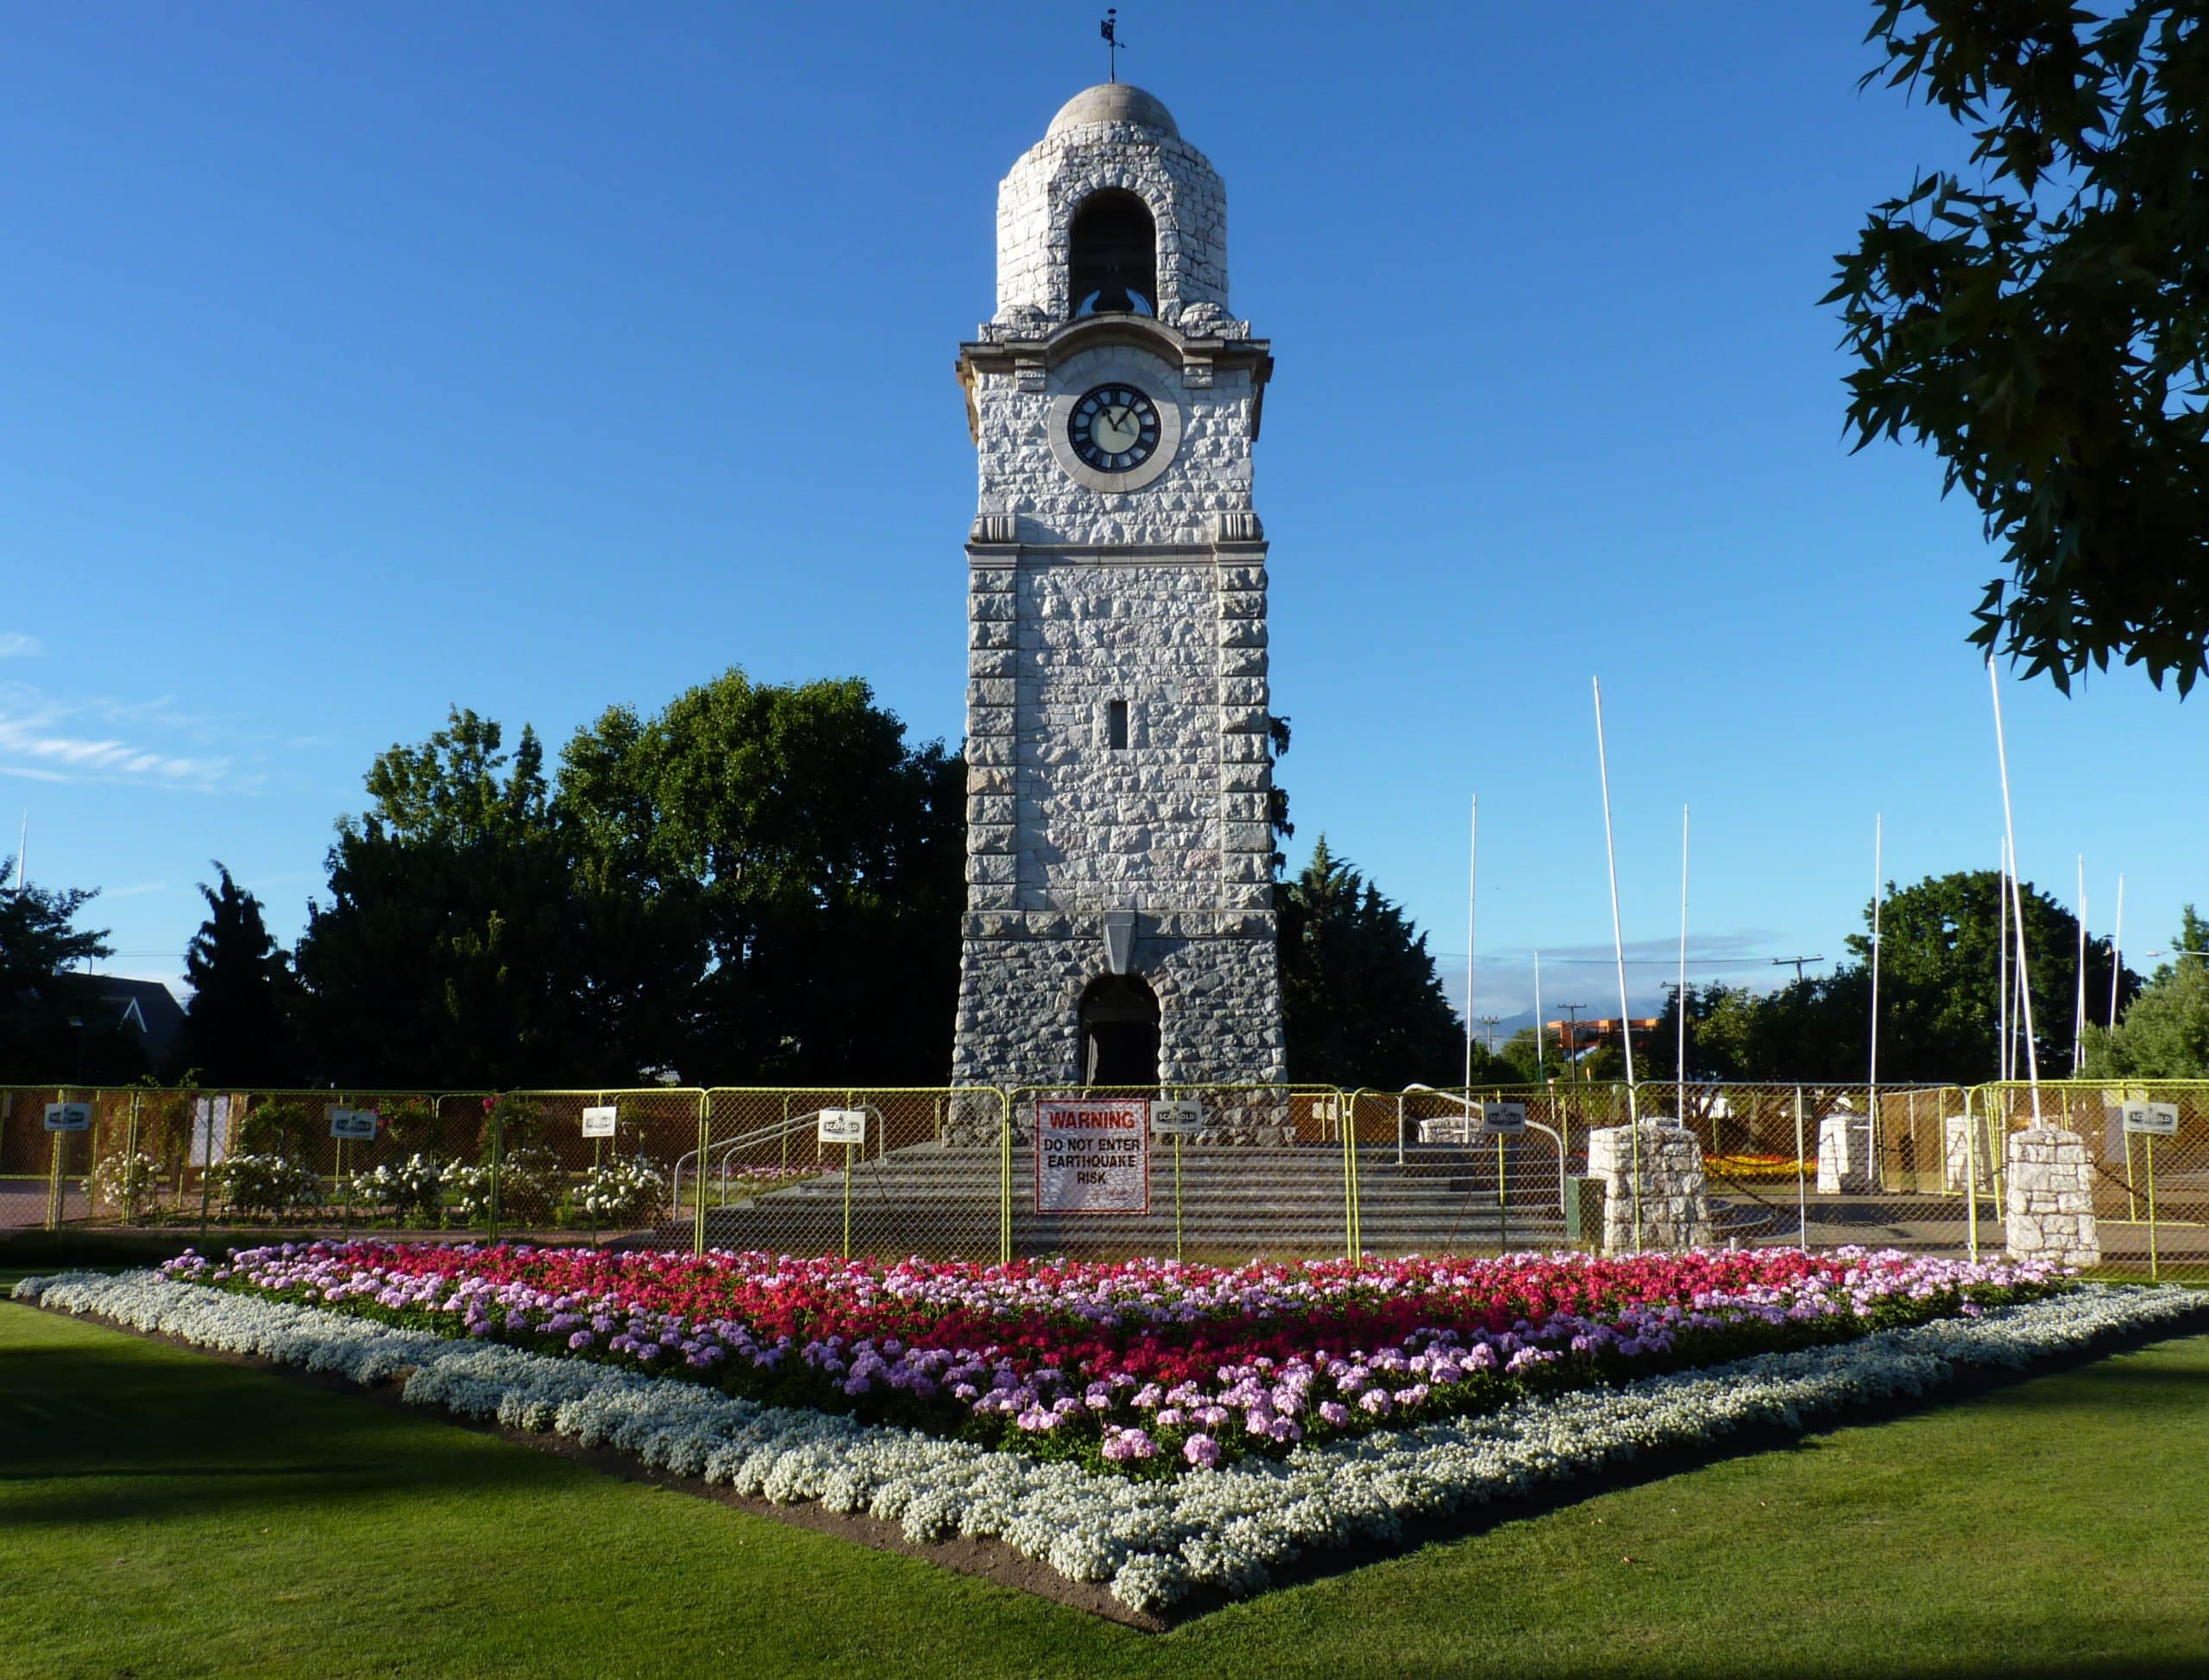 Seymour Square with clocktower.